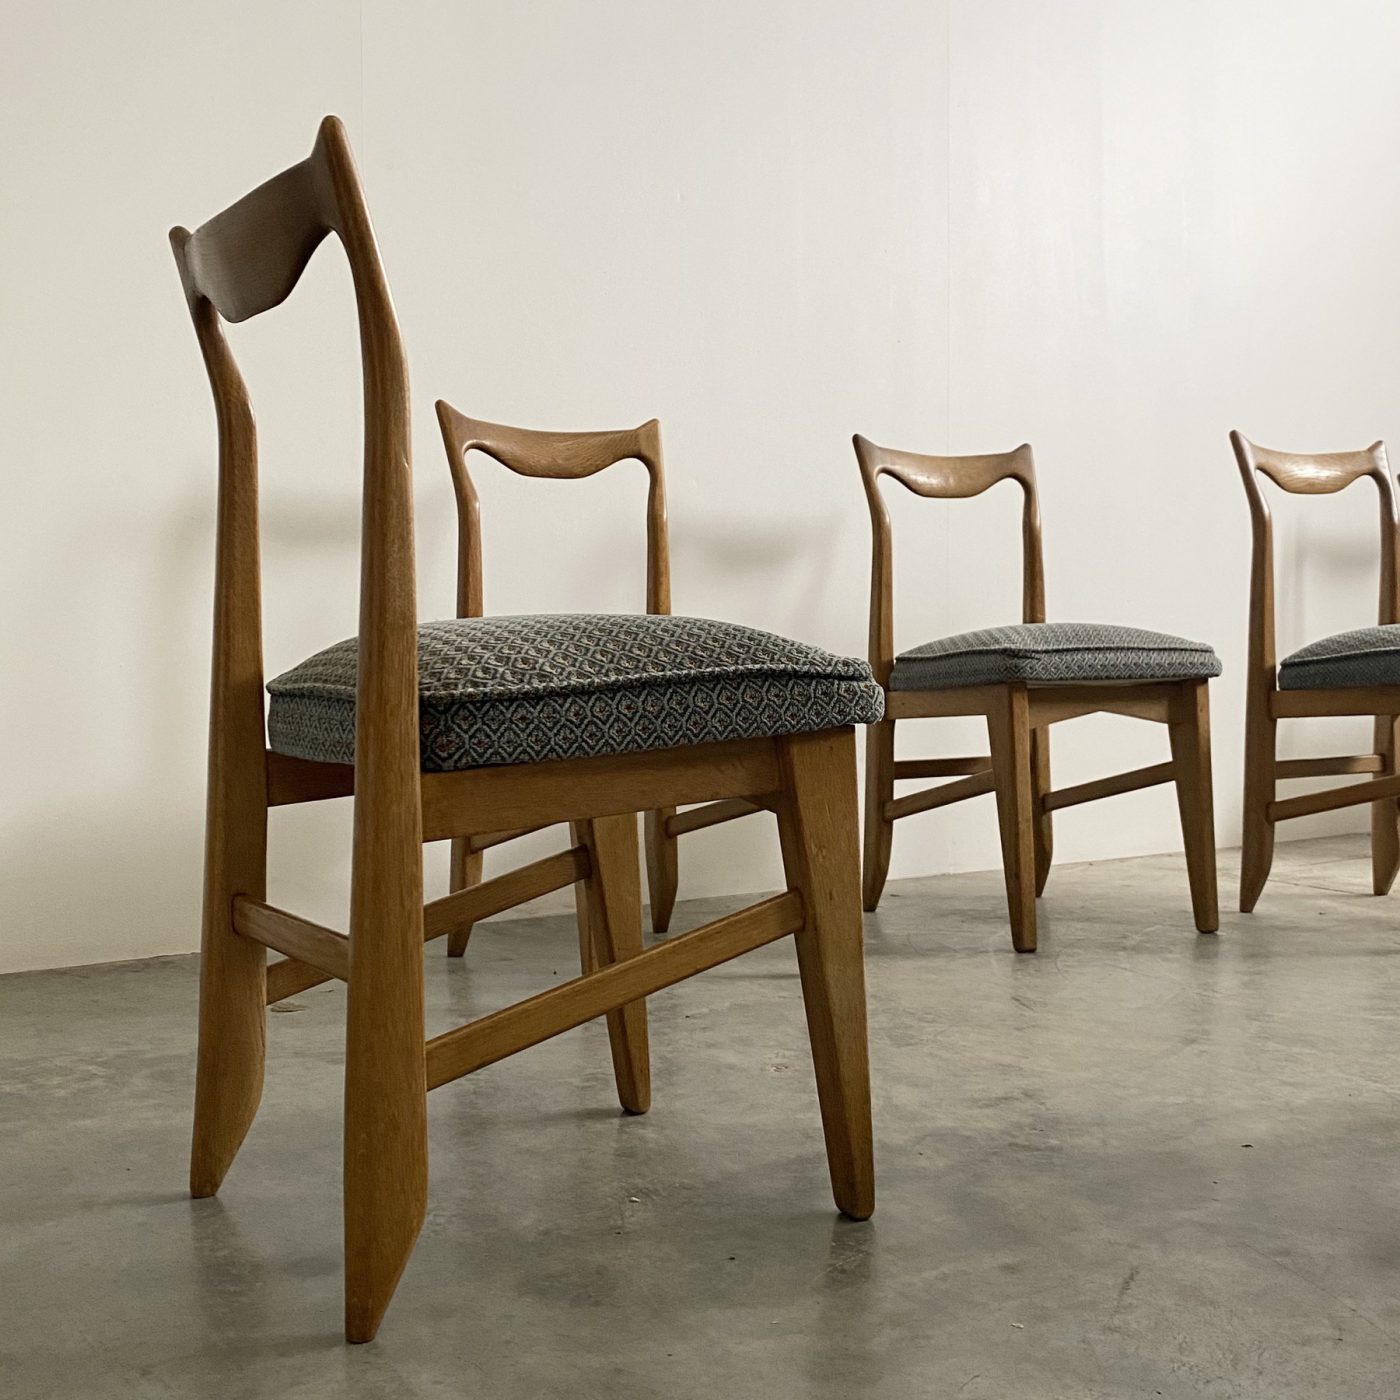 objet-vagabond-midcentury-chairs0008